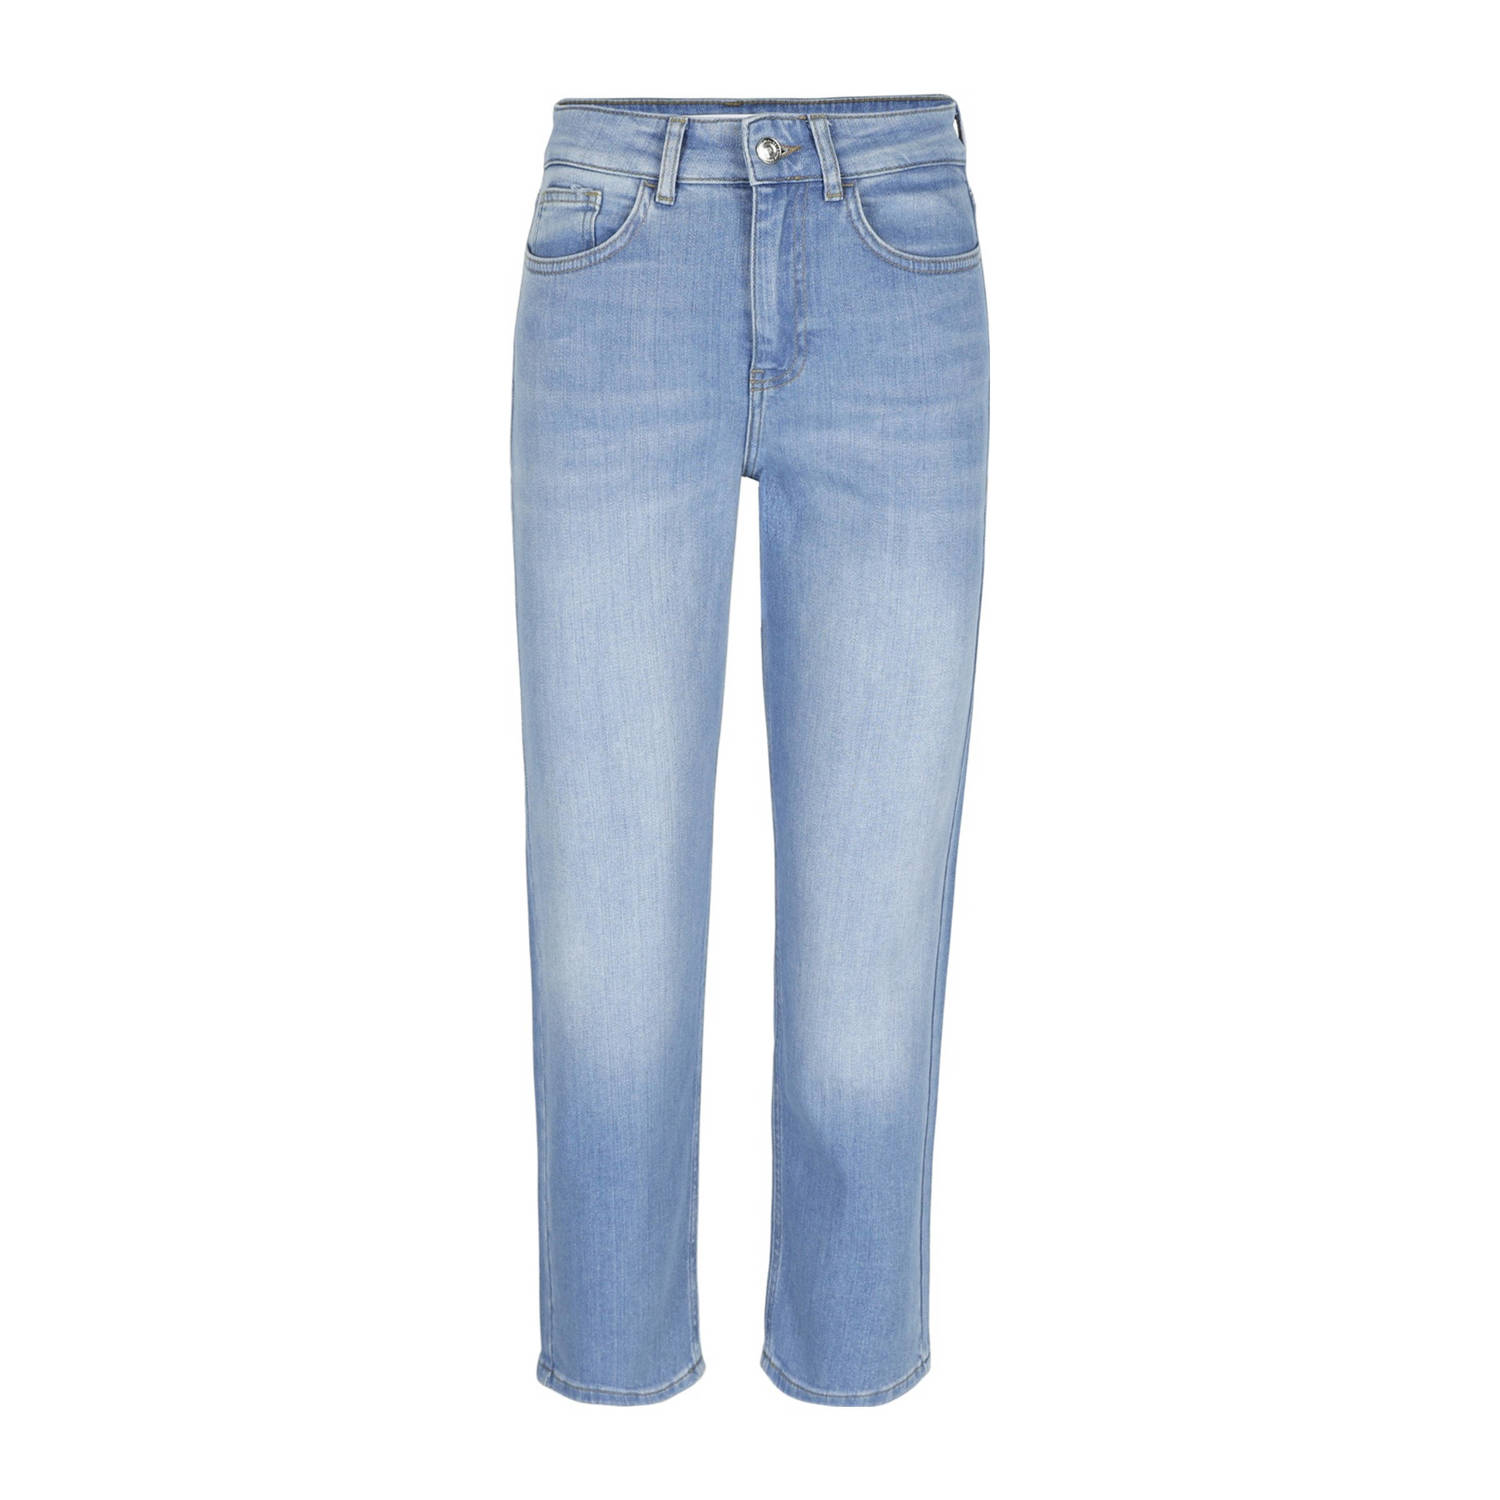 LOLALIZA high waist straight jeans light blue denim